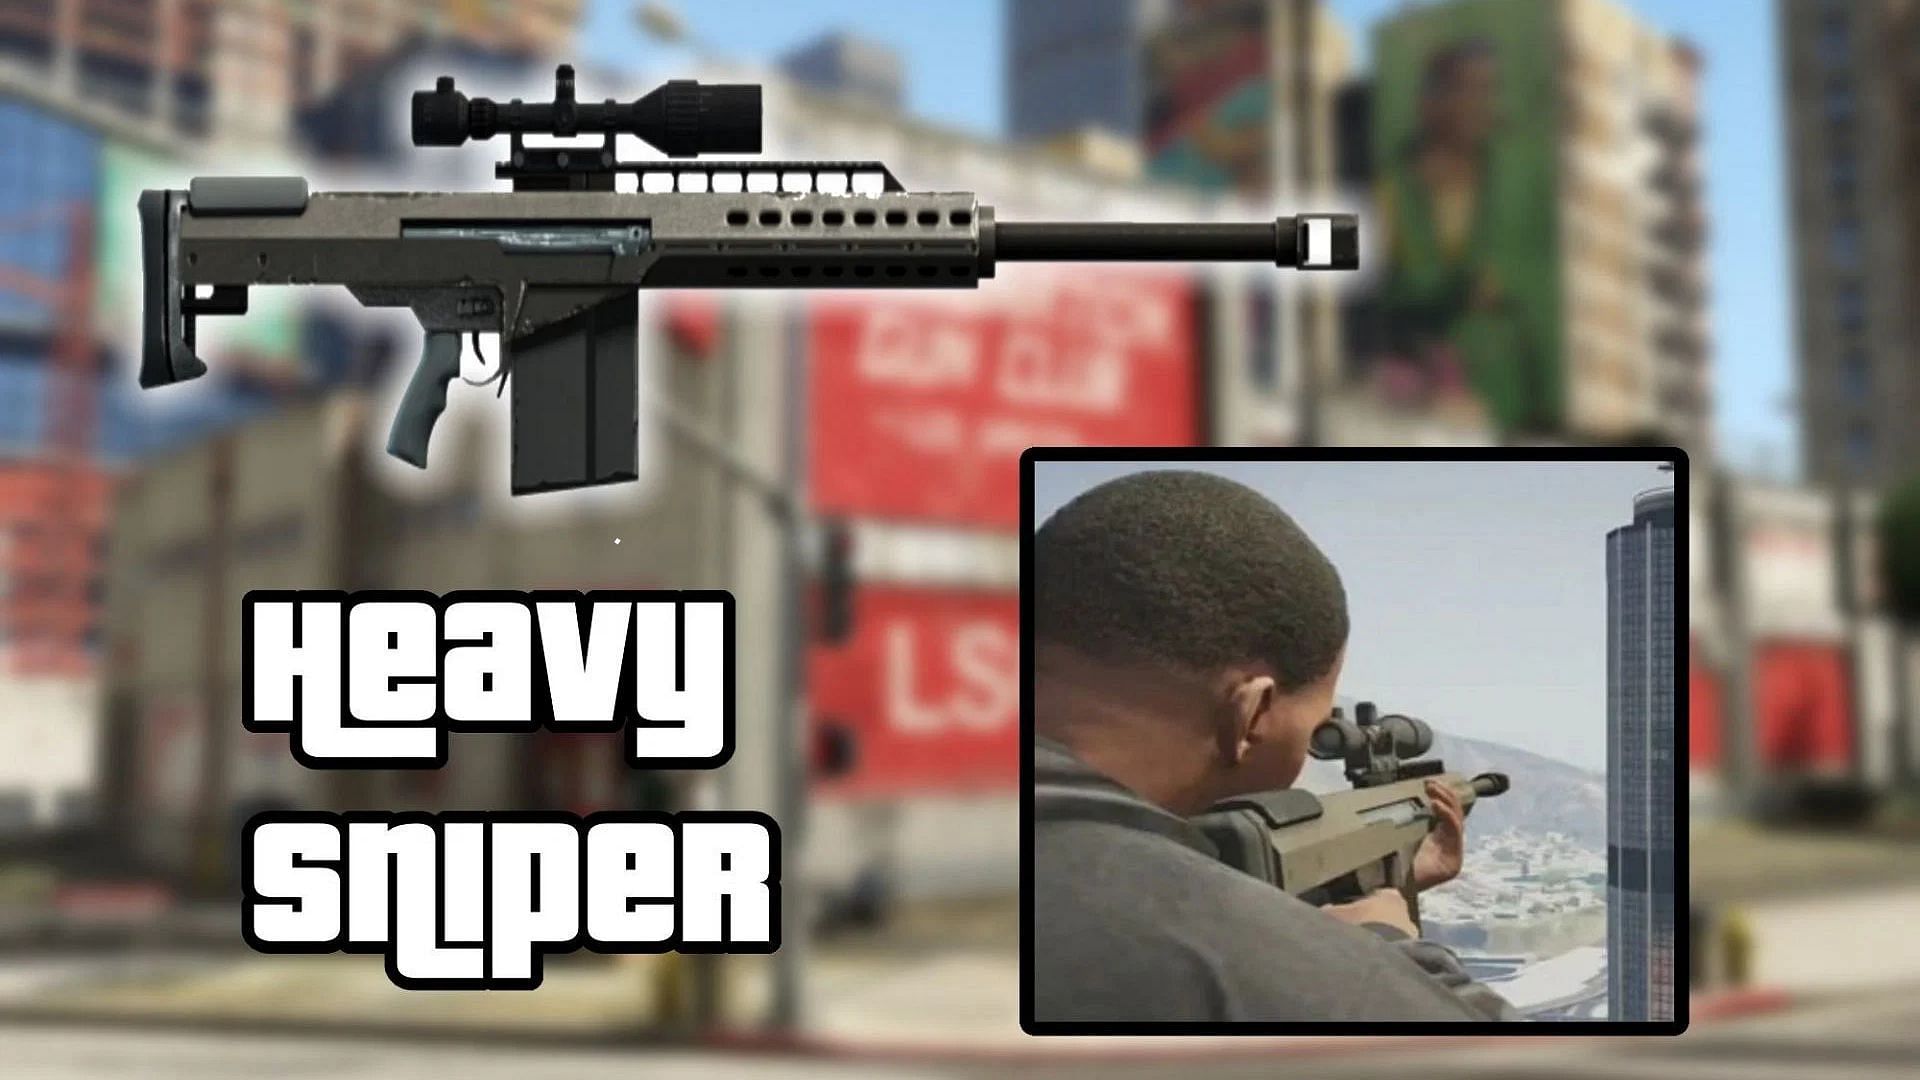 The Heavy Sniper is one of the best guns in GTA Online (Image via Sportskeeda)